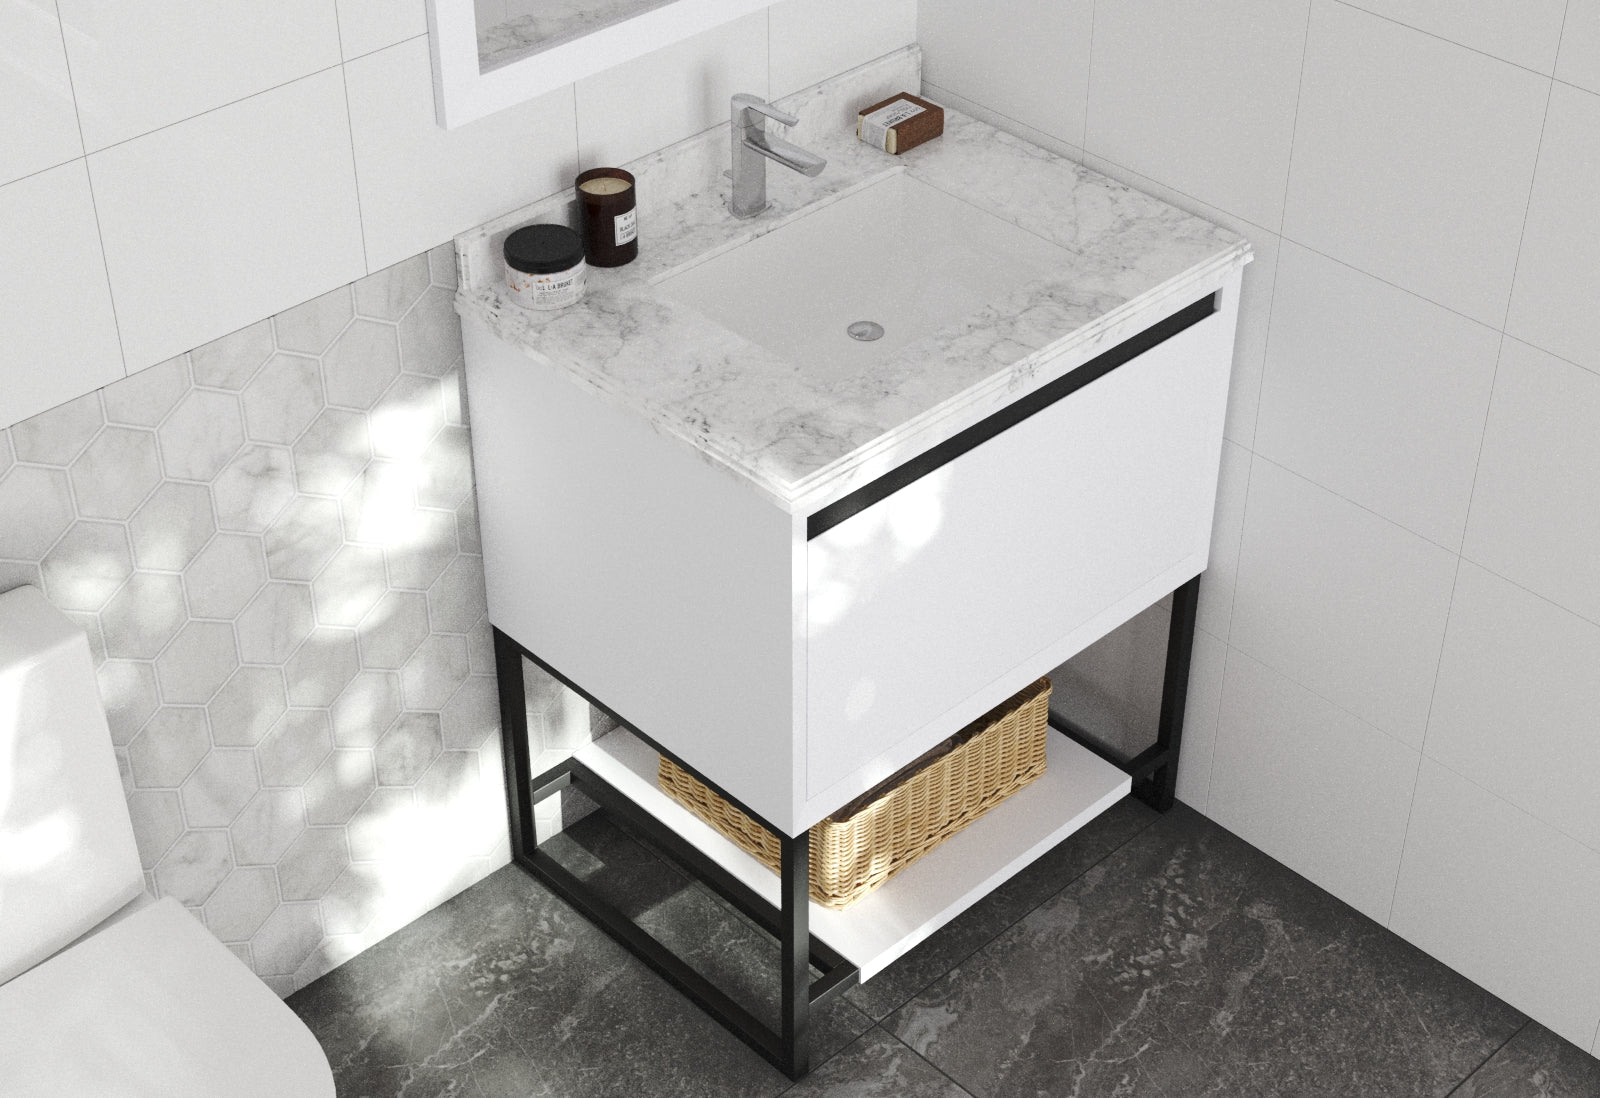 Laviva - Alto 30" White Bathroom Vanity with White Carrara Marble Countertop | 313SMR-30W-WC